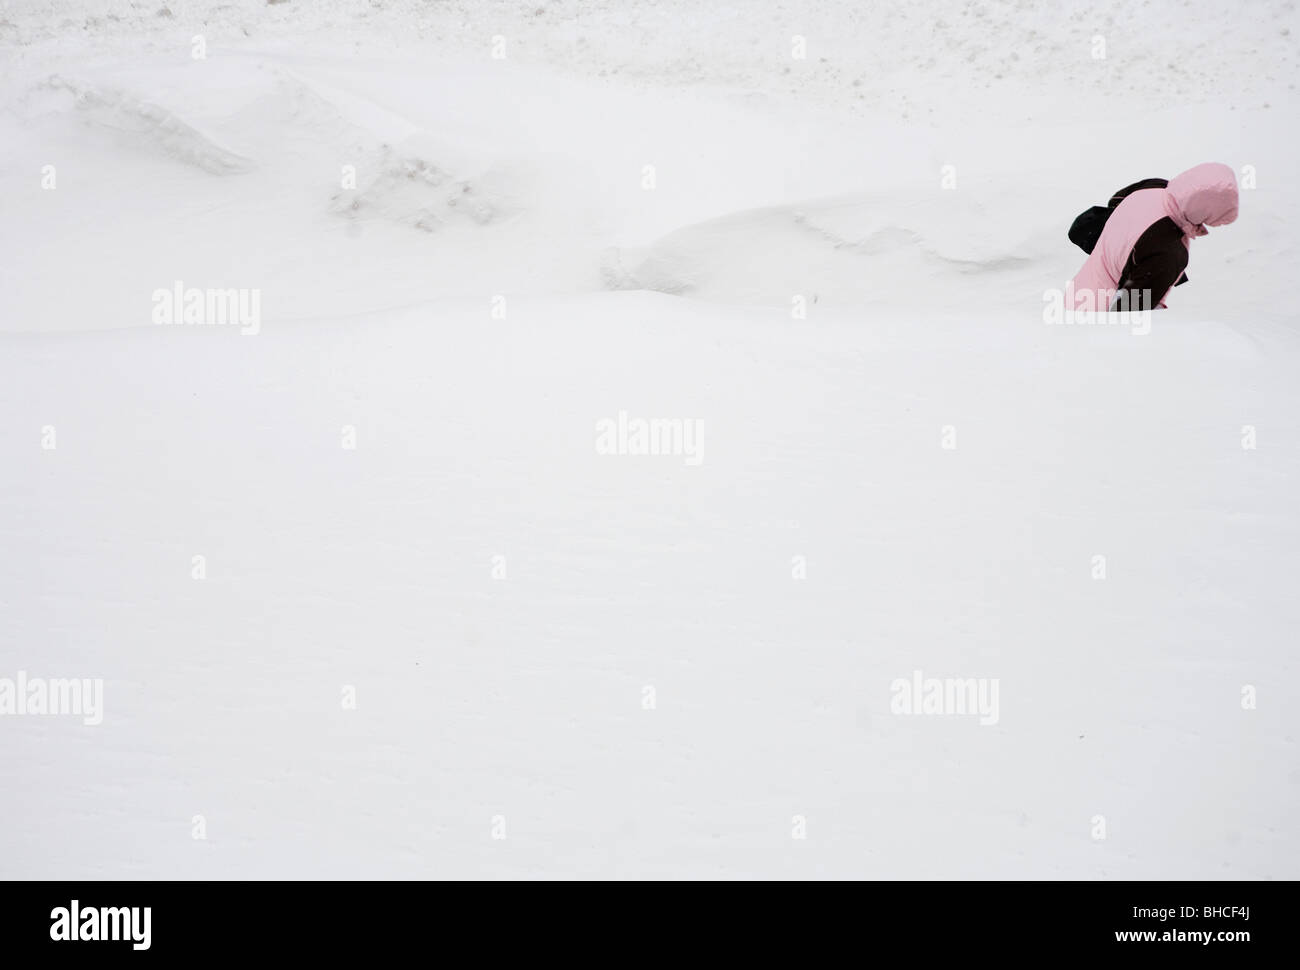 Washington DC snow scenes.  Stock Photo